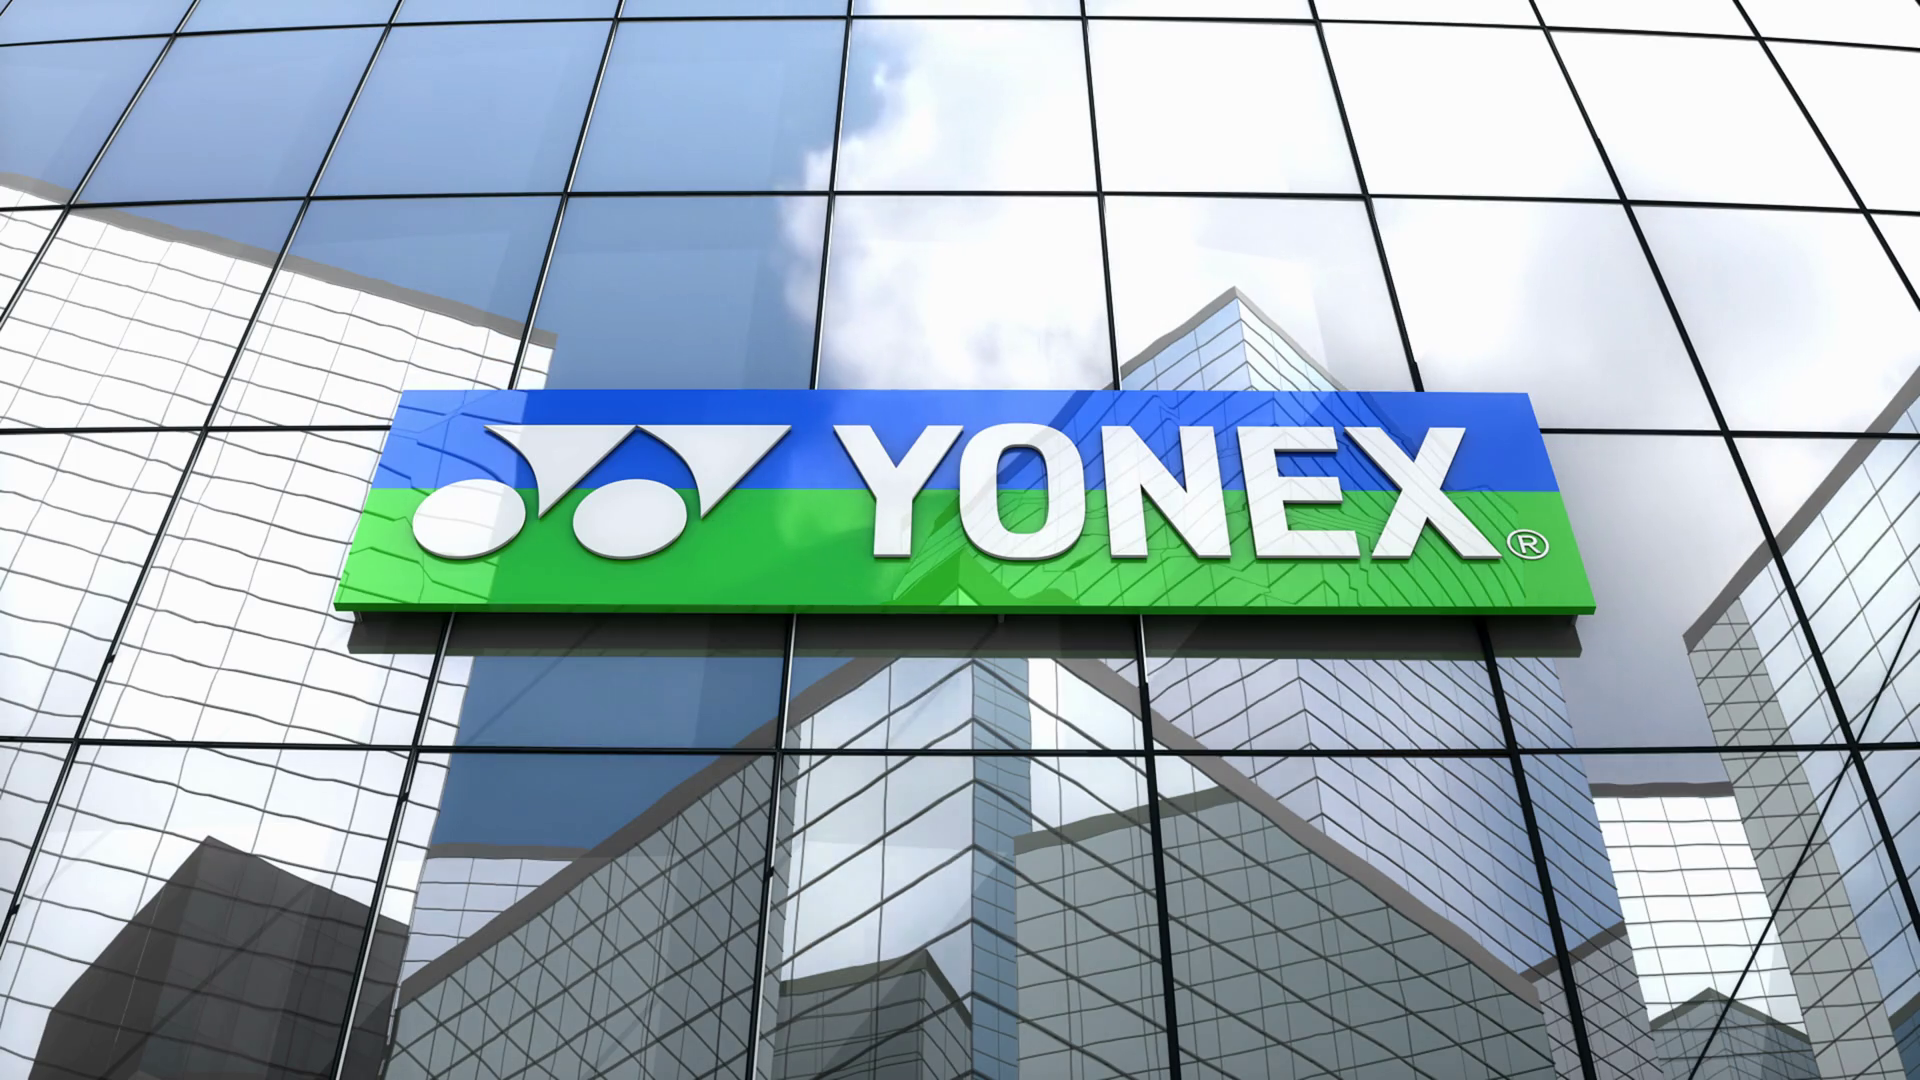 Editorial, Yonex Co., Ltd. Logo On Glass Building. Motion Background 00:10 SBV 322348318